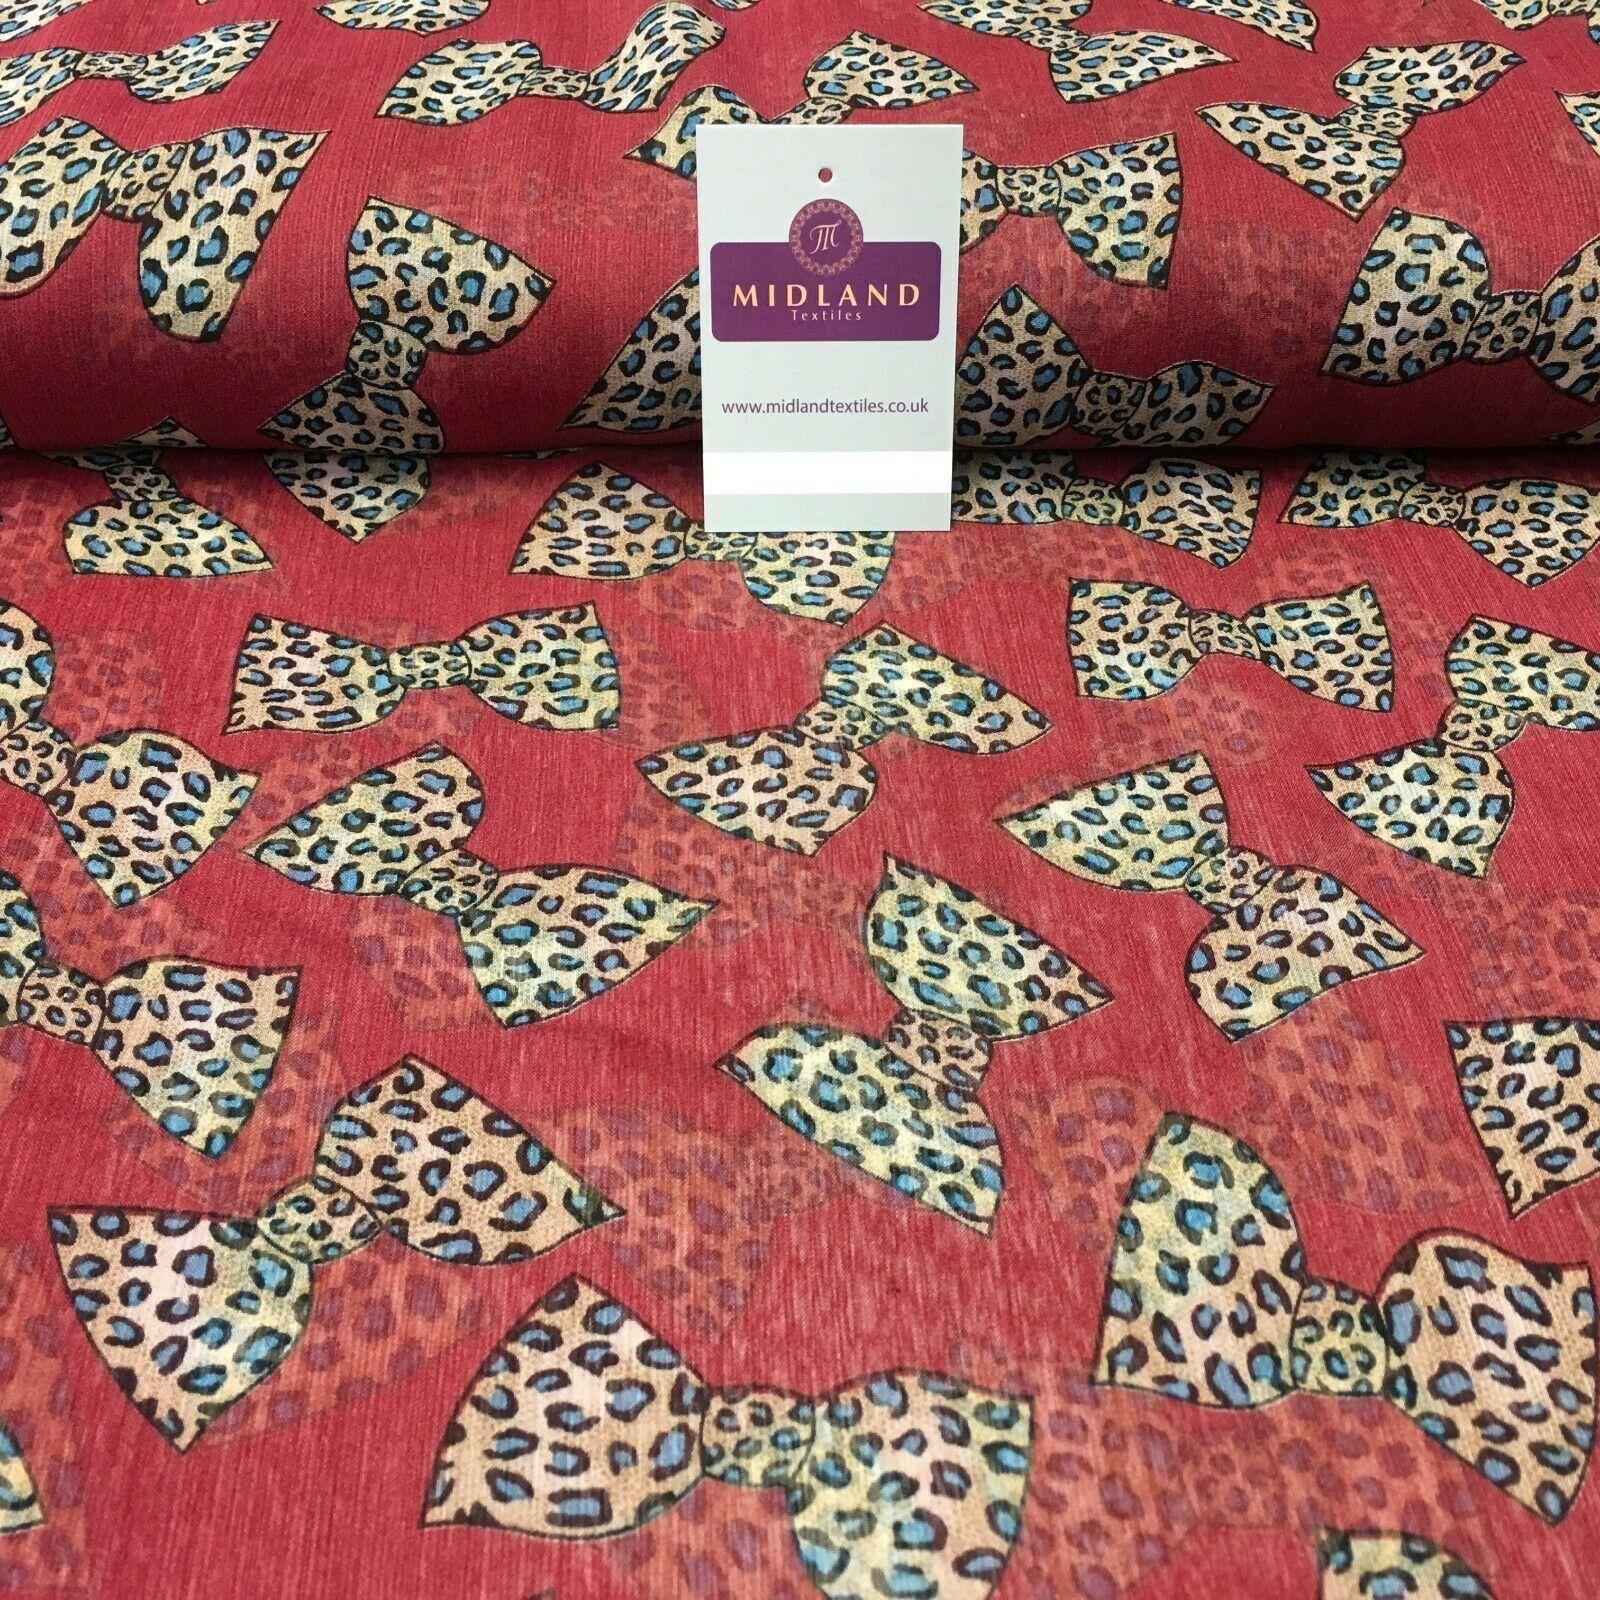 Maroon Animal Bows Printed Crinkle Georgette Chiffon Fabric 150cm wide MK1090-22